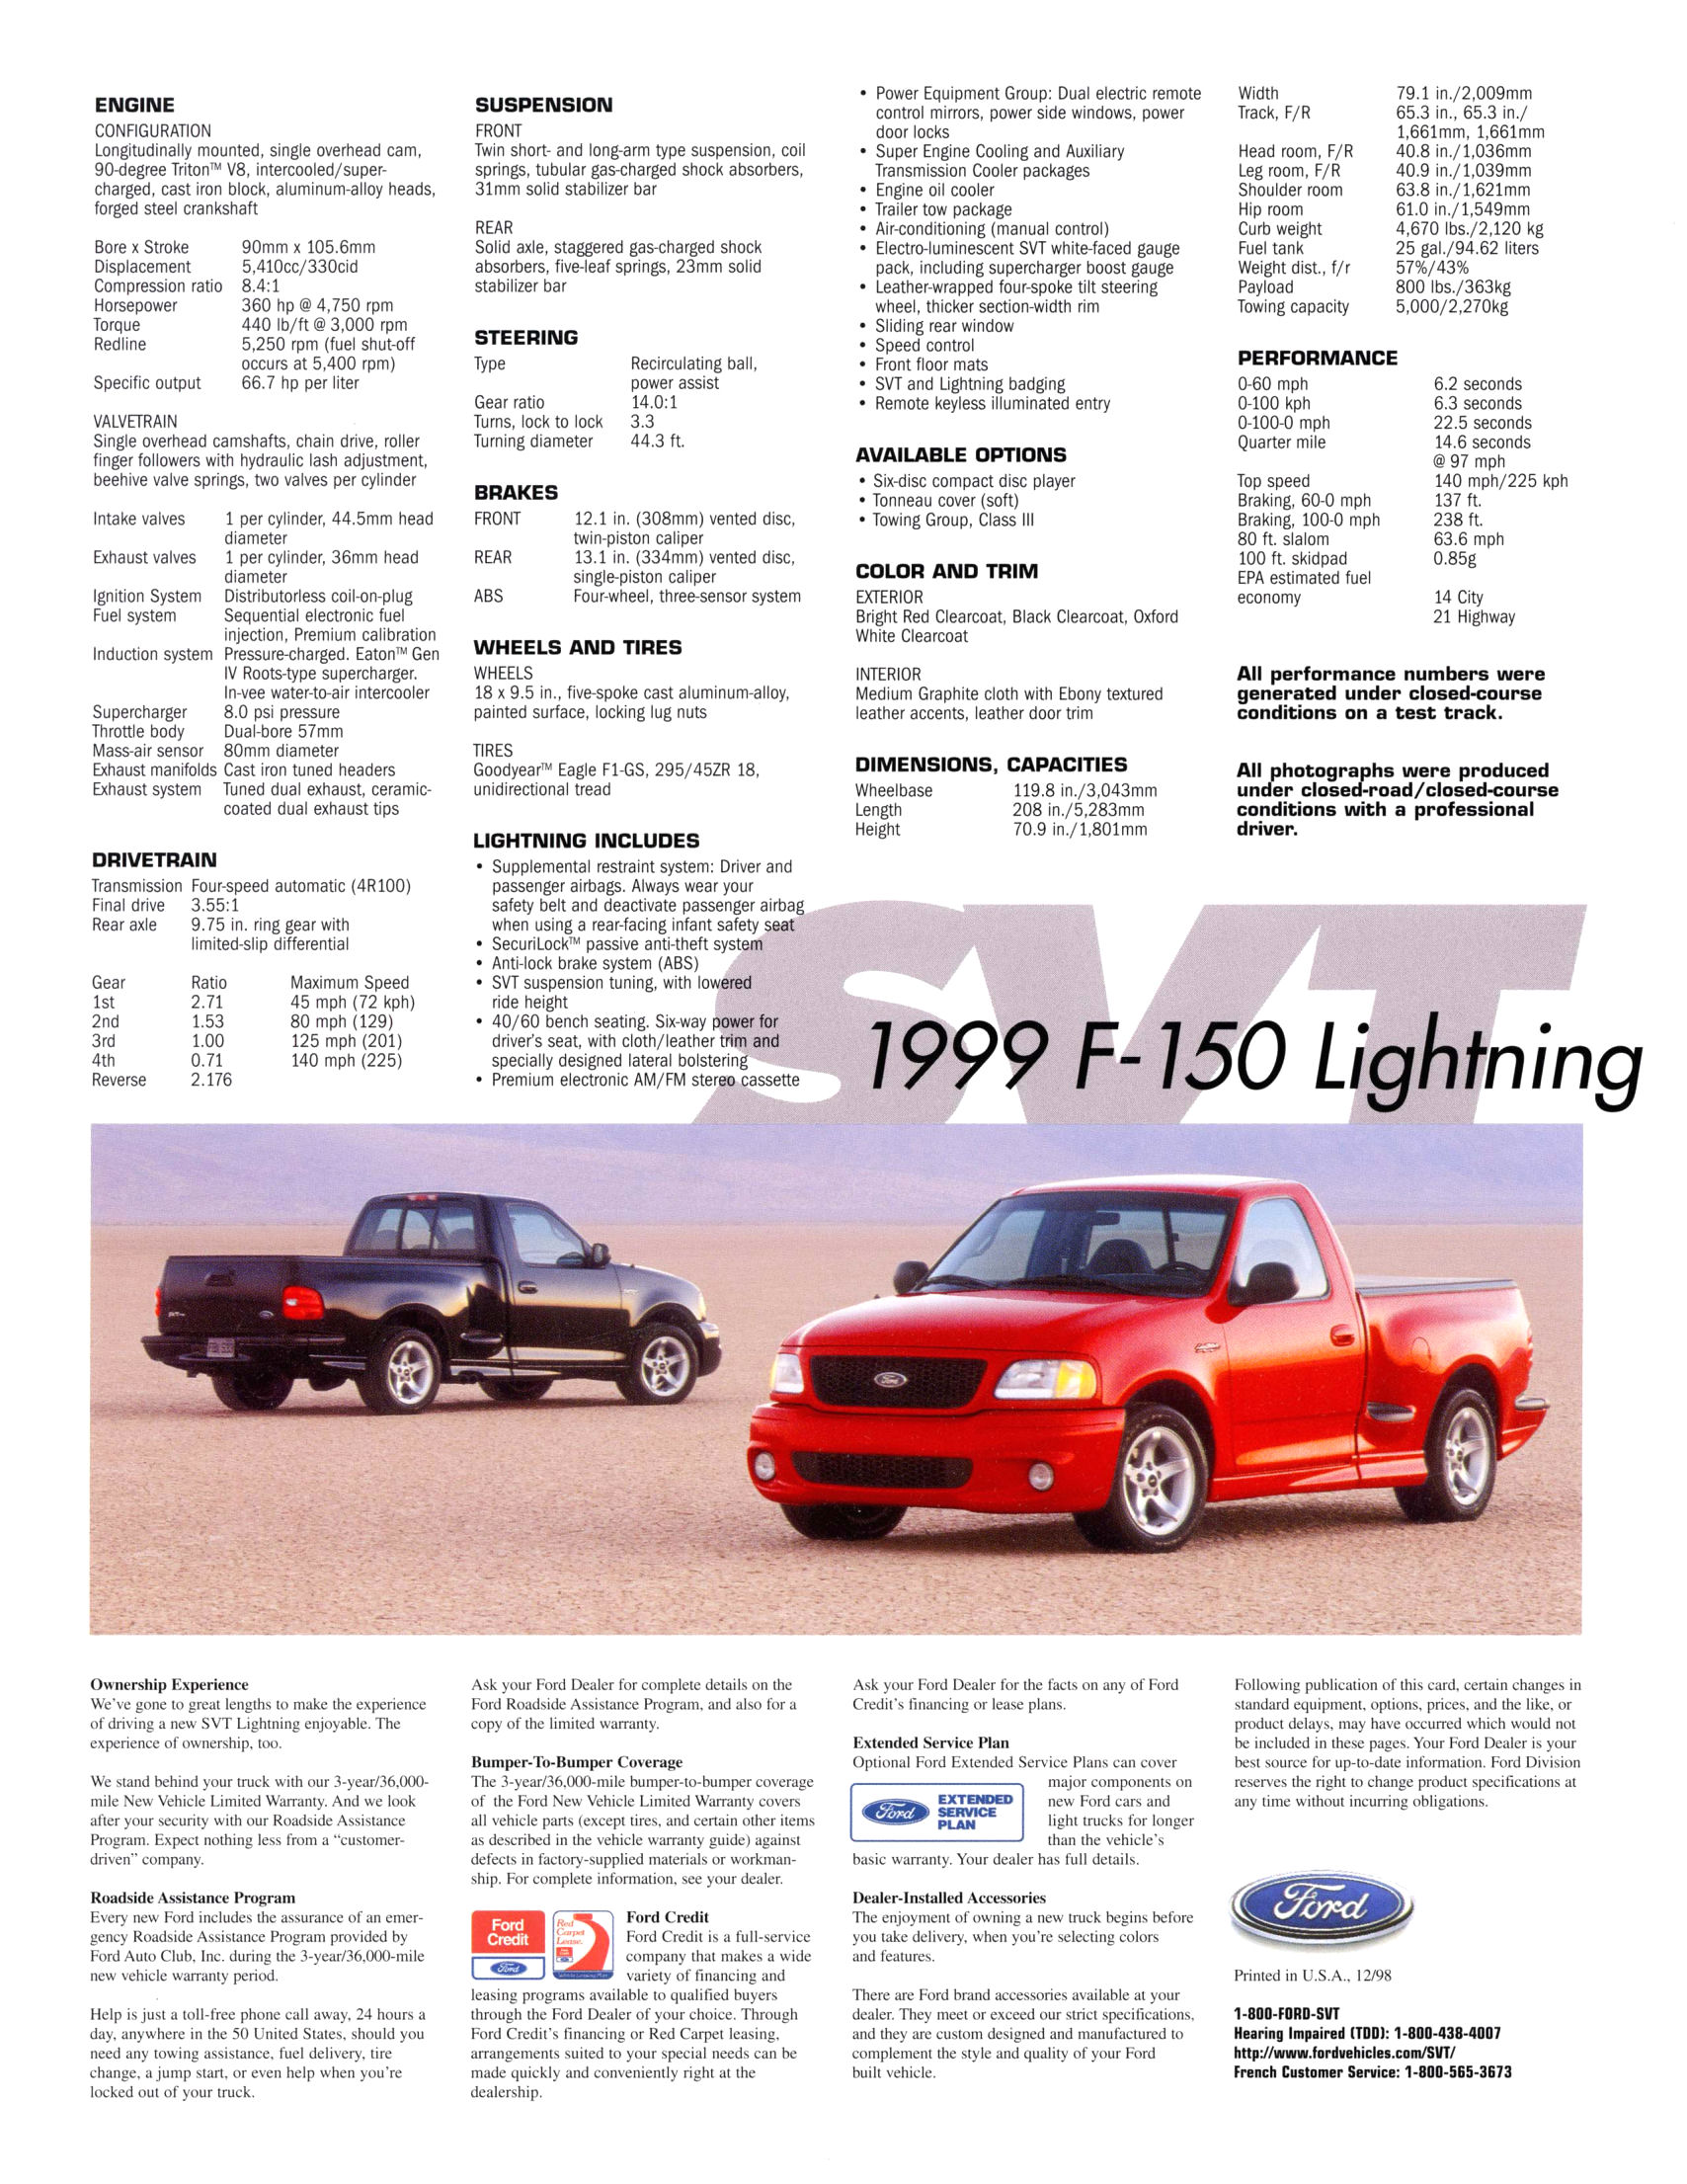 1999_Ford_SVT_F-150_Lightning-02